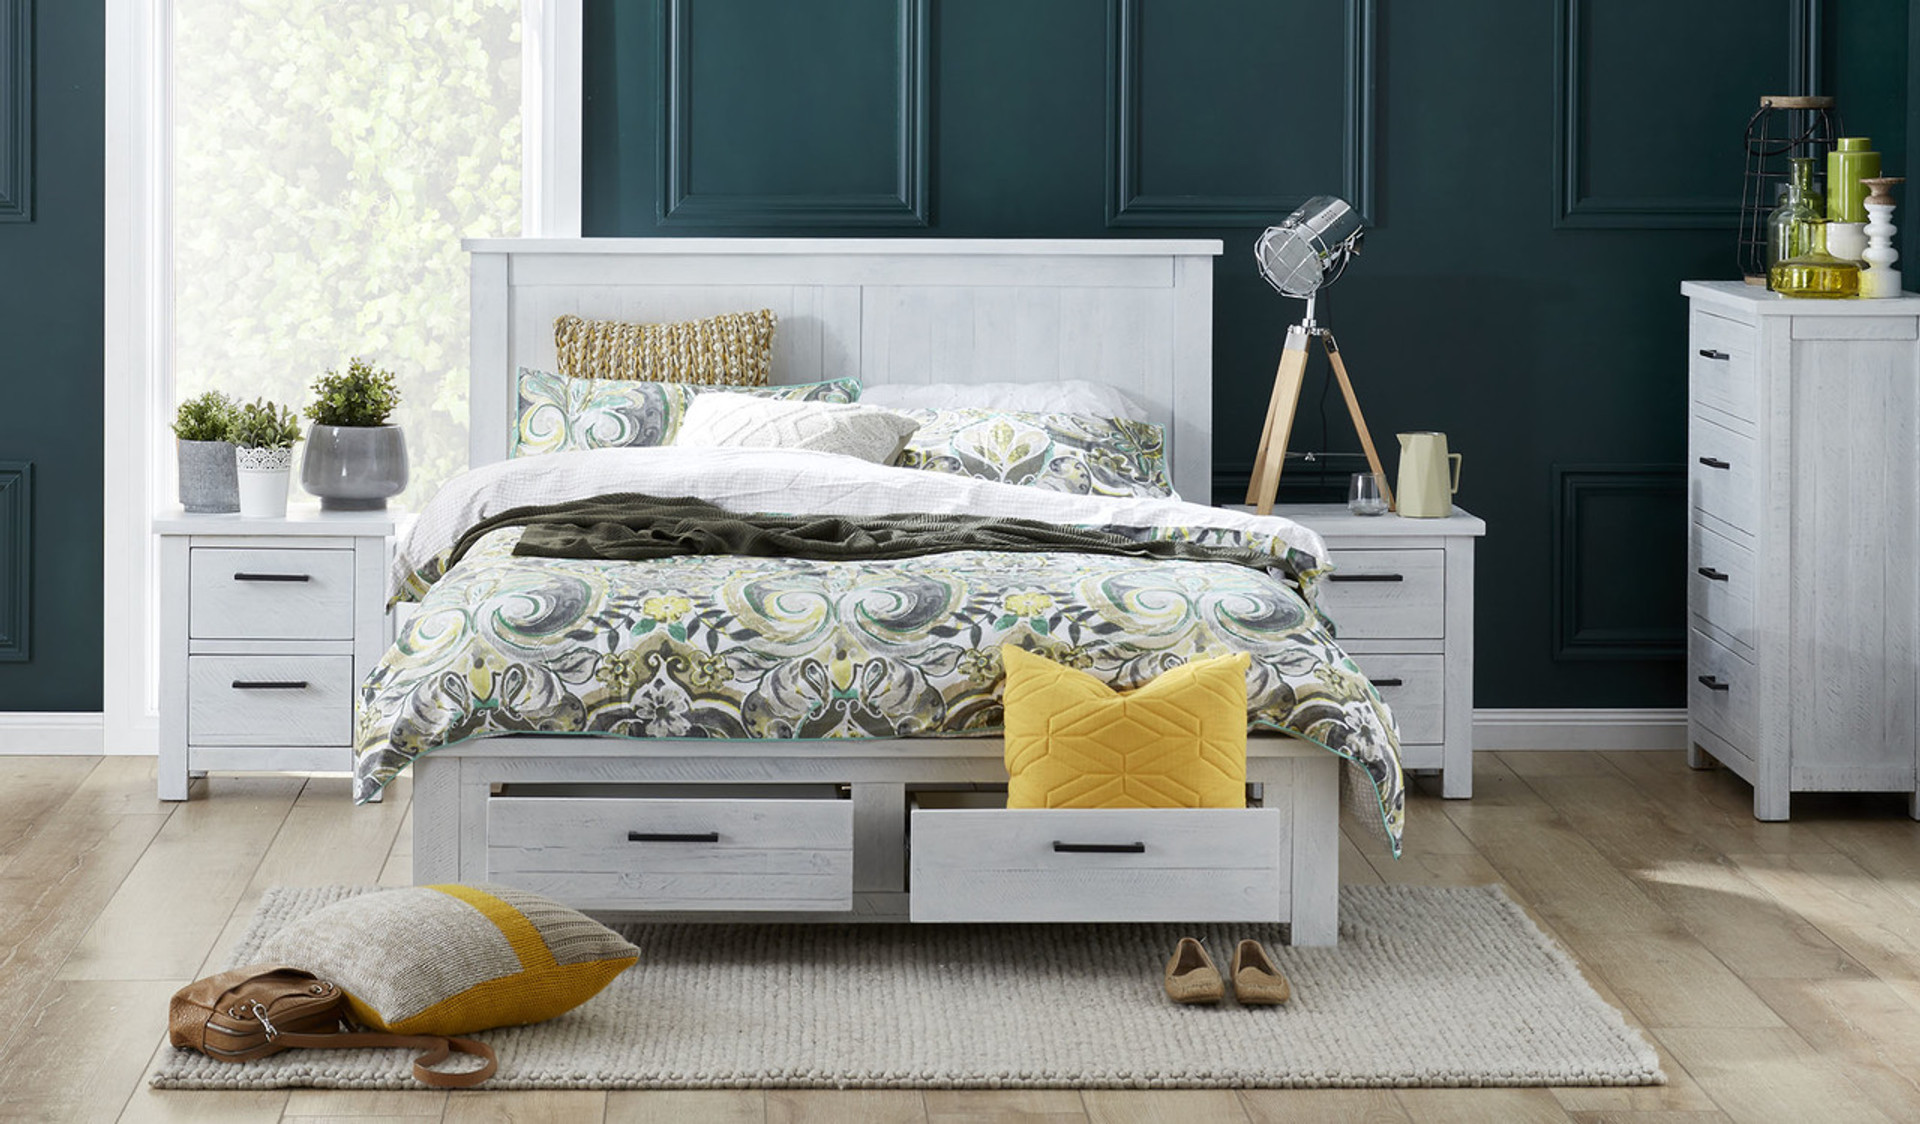 Bella white wash distressed bedroom suite | Focus on Furniture